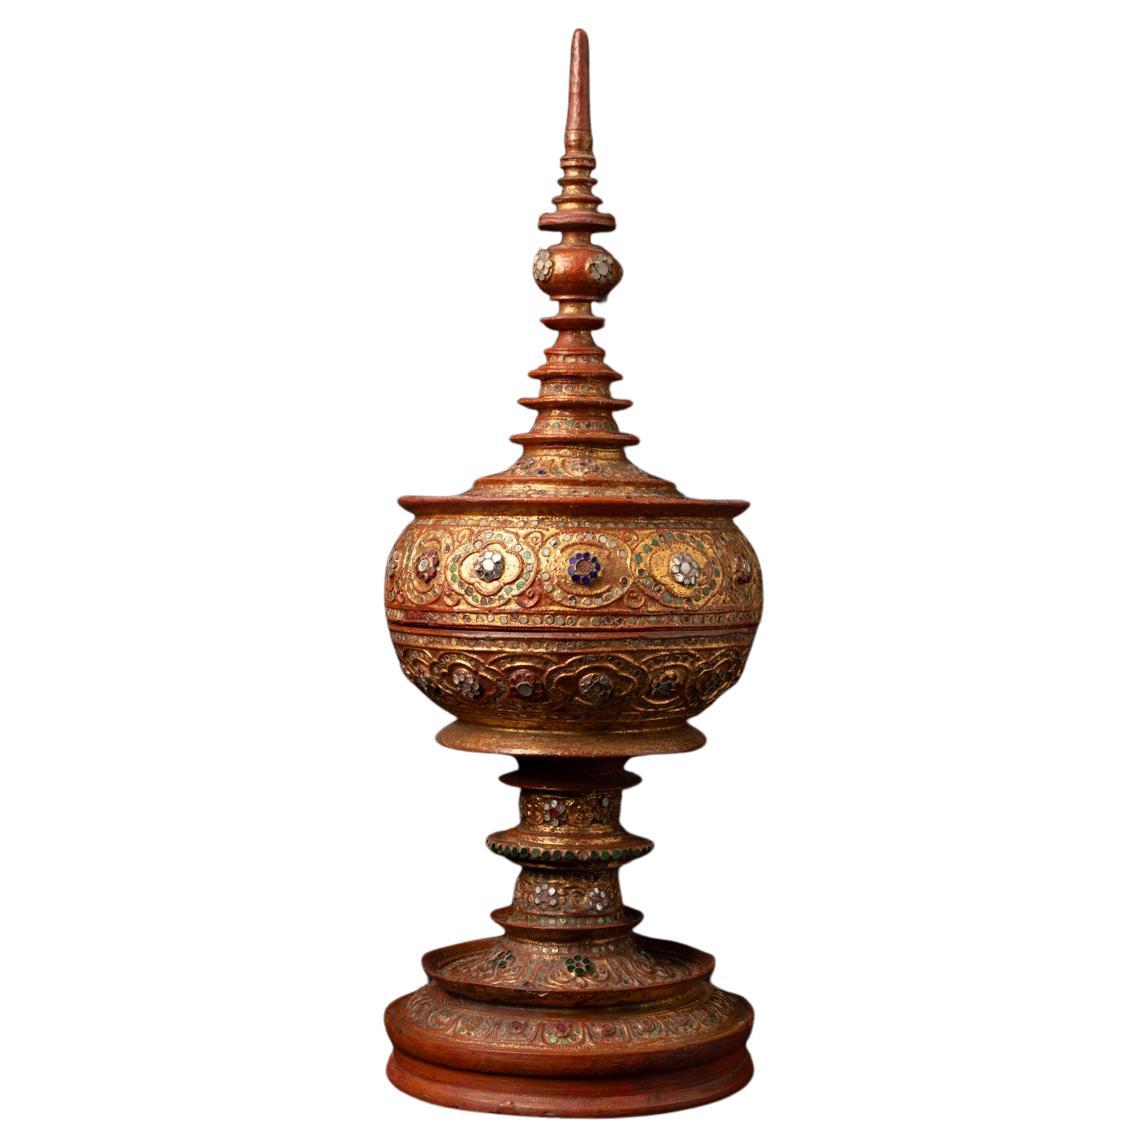 19th century Antique wooden Burmese offering vessel from Burma